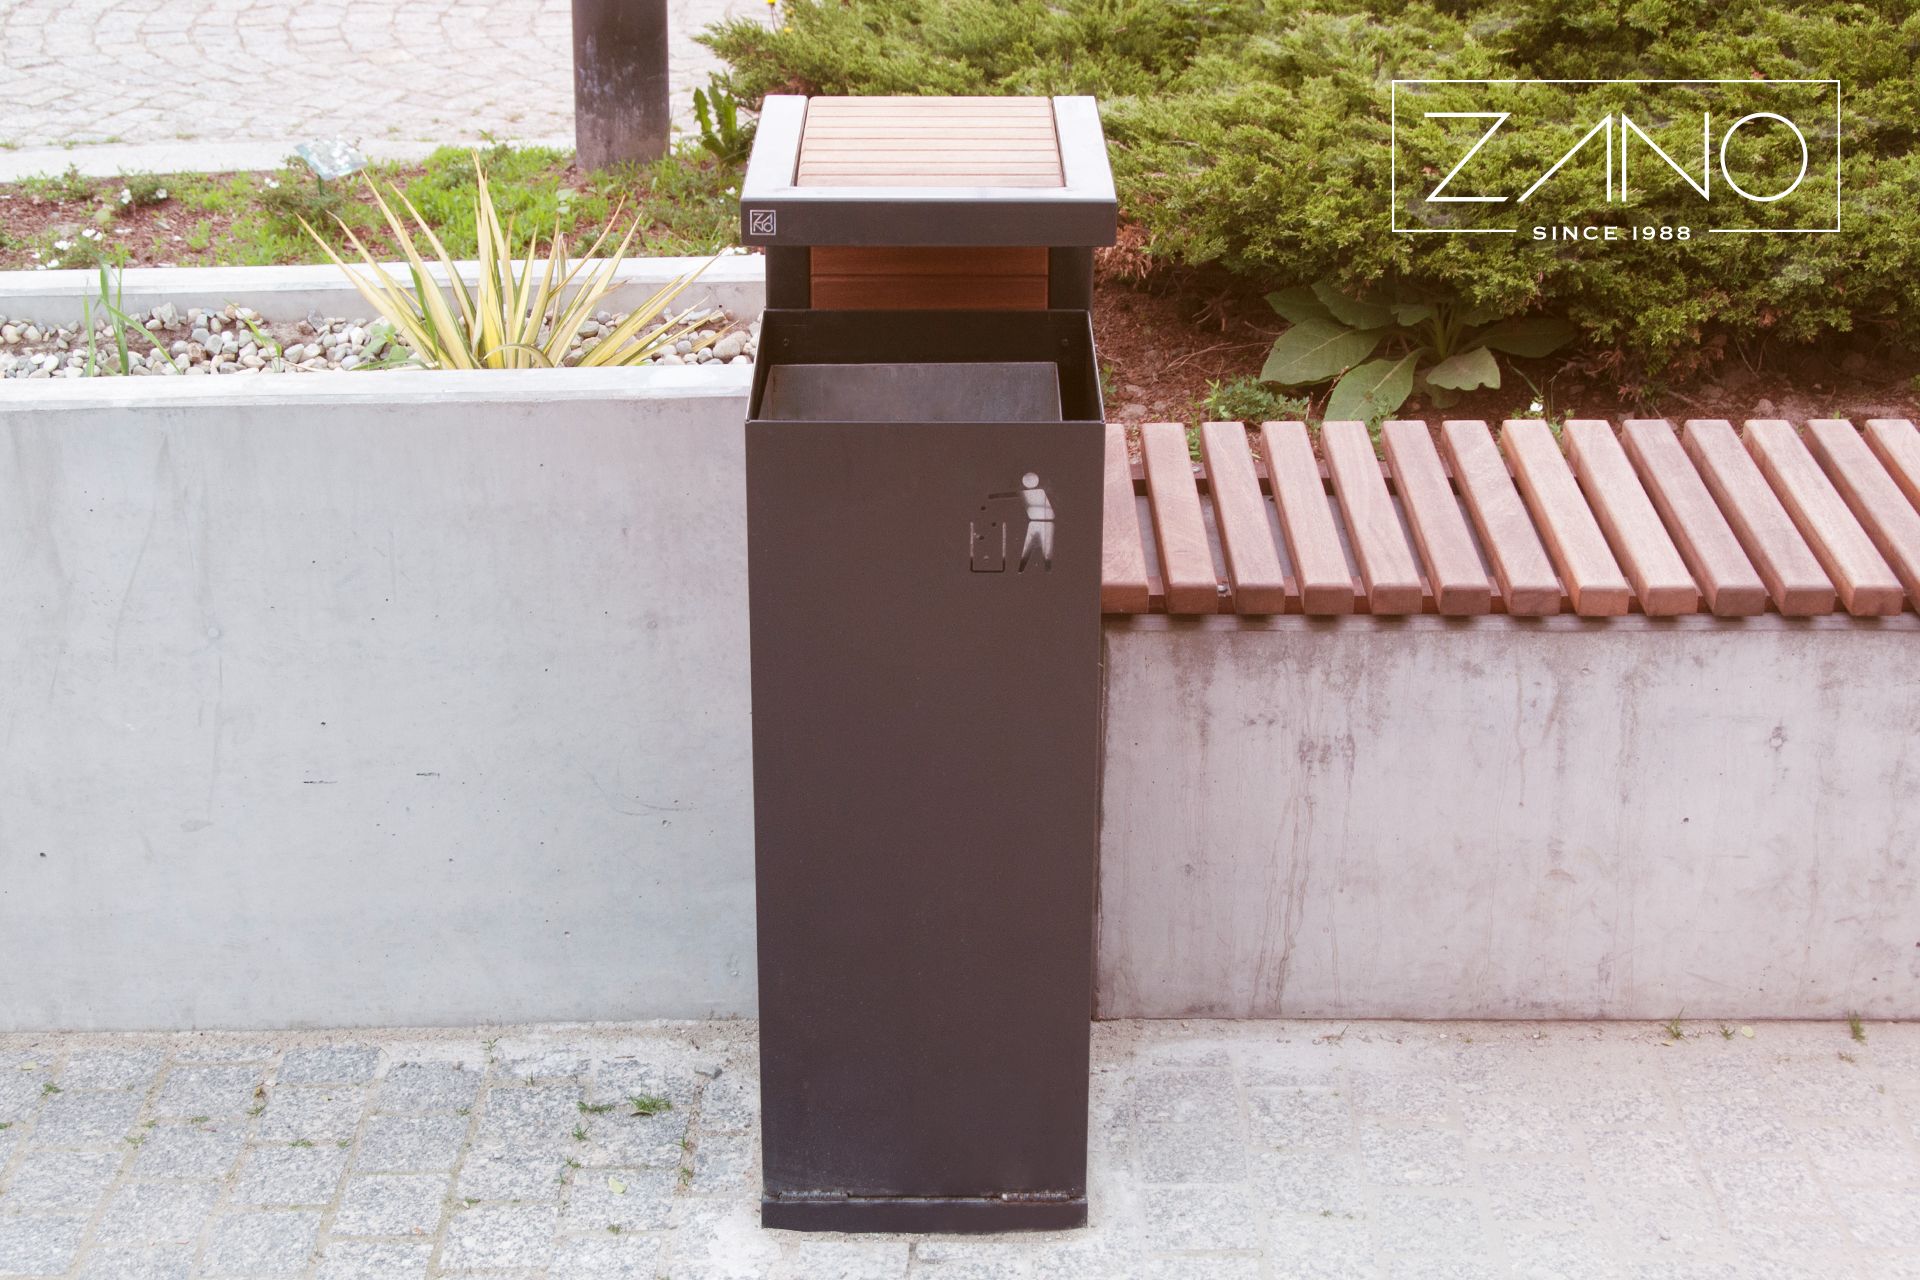 Contemporary designed outdoor litter bin